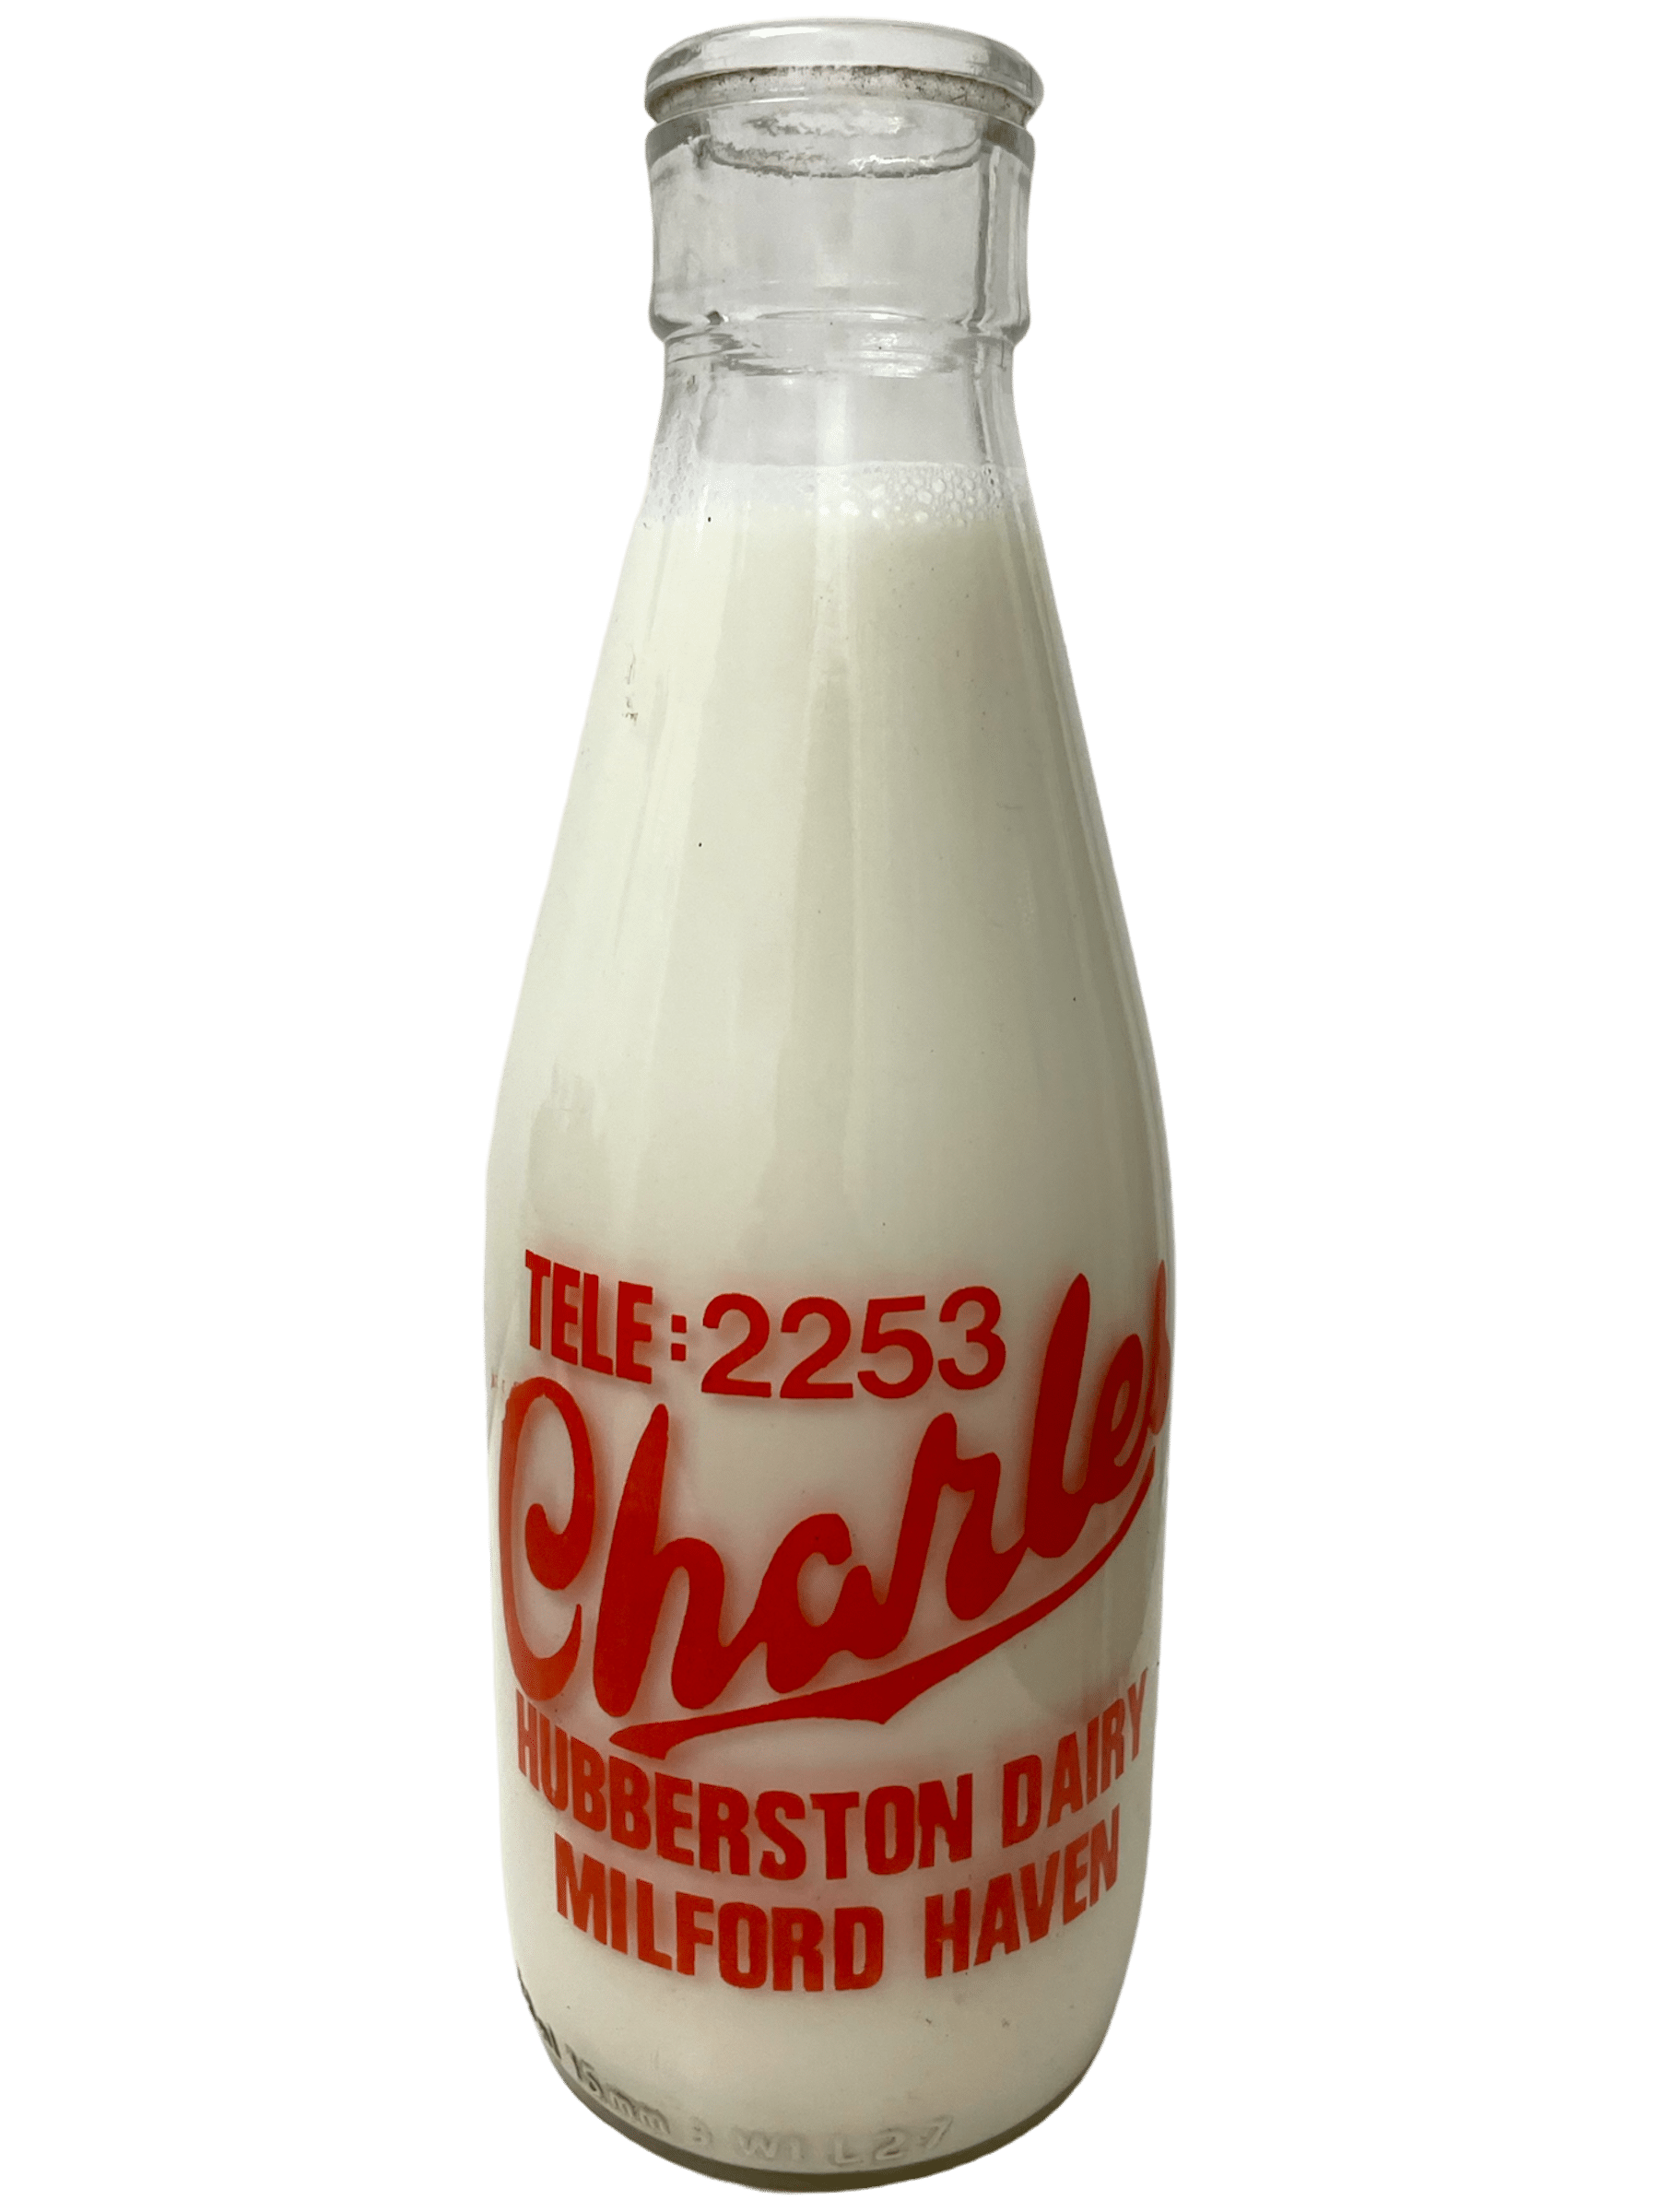 Charles Hubberston Dairy - www.Kelis.info #KelisTheBottleBank